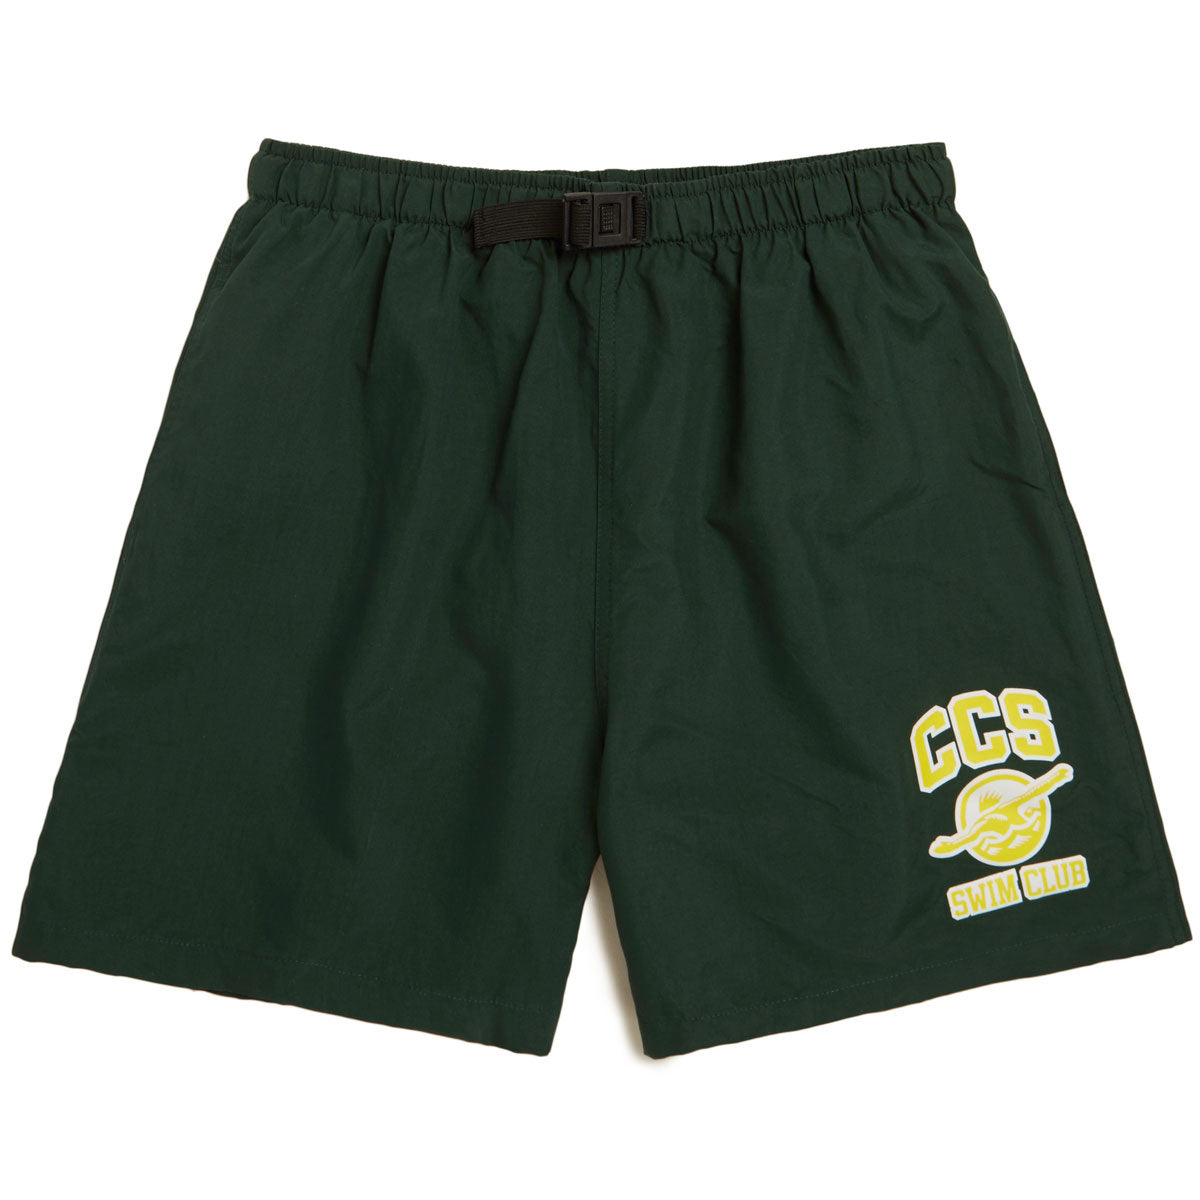 CCS Swim Club Hybrid Shorts - Green image 1